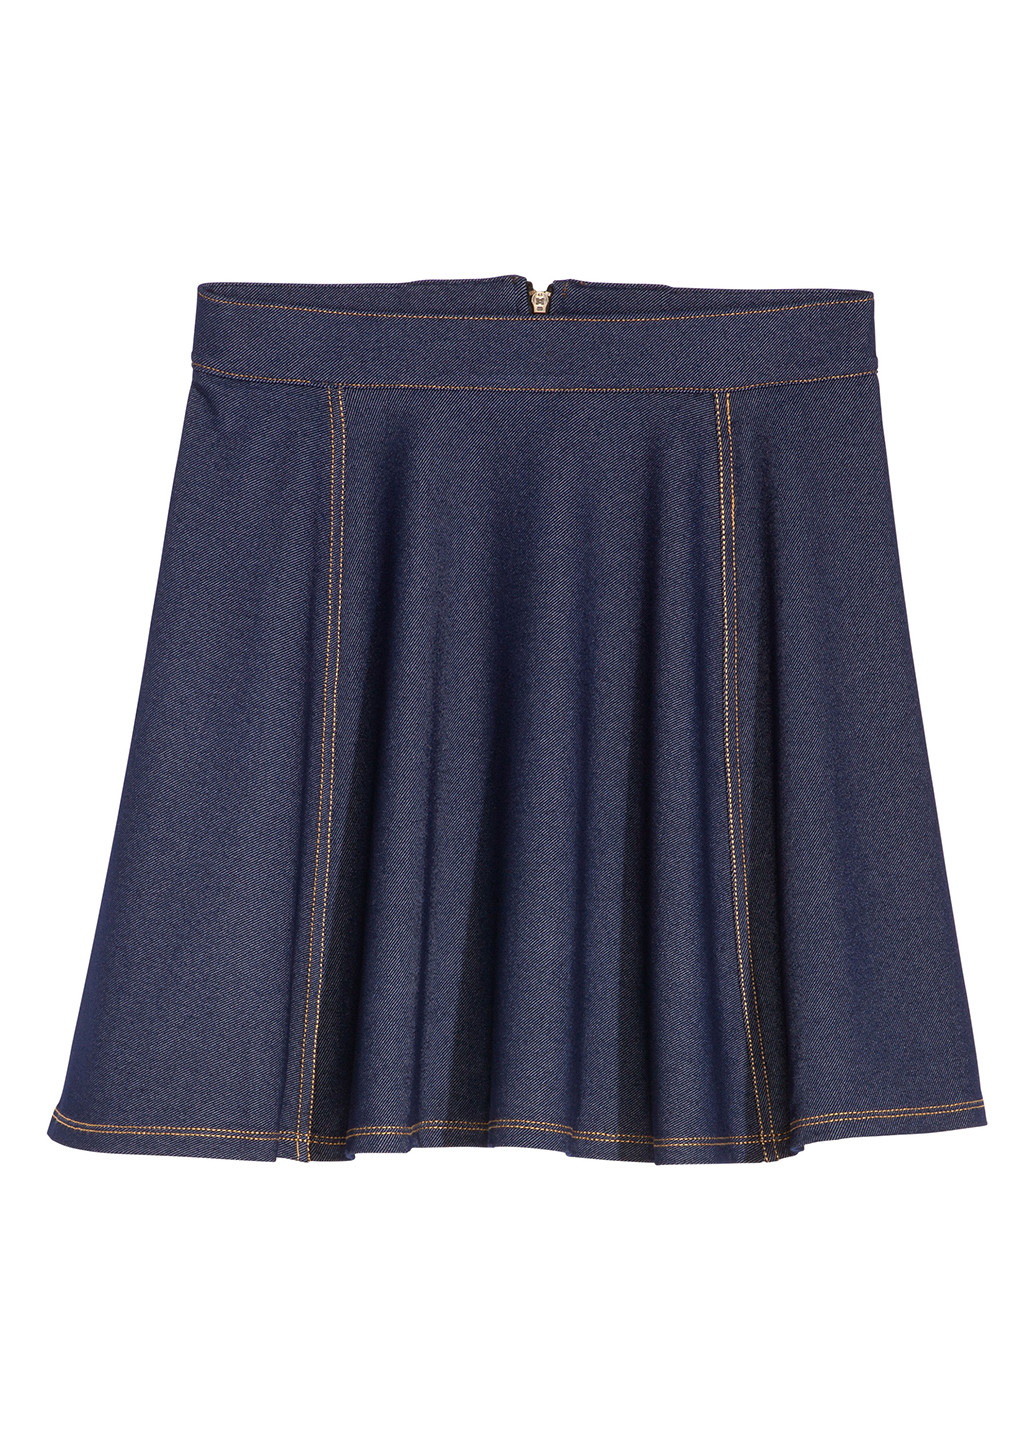 Темно-синяя кэжуал юбка H&M клешированная-солнце